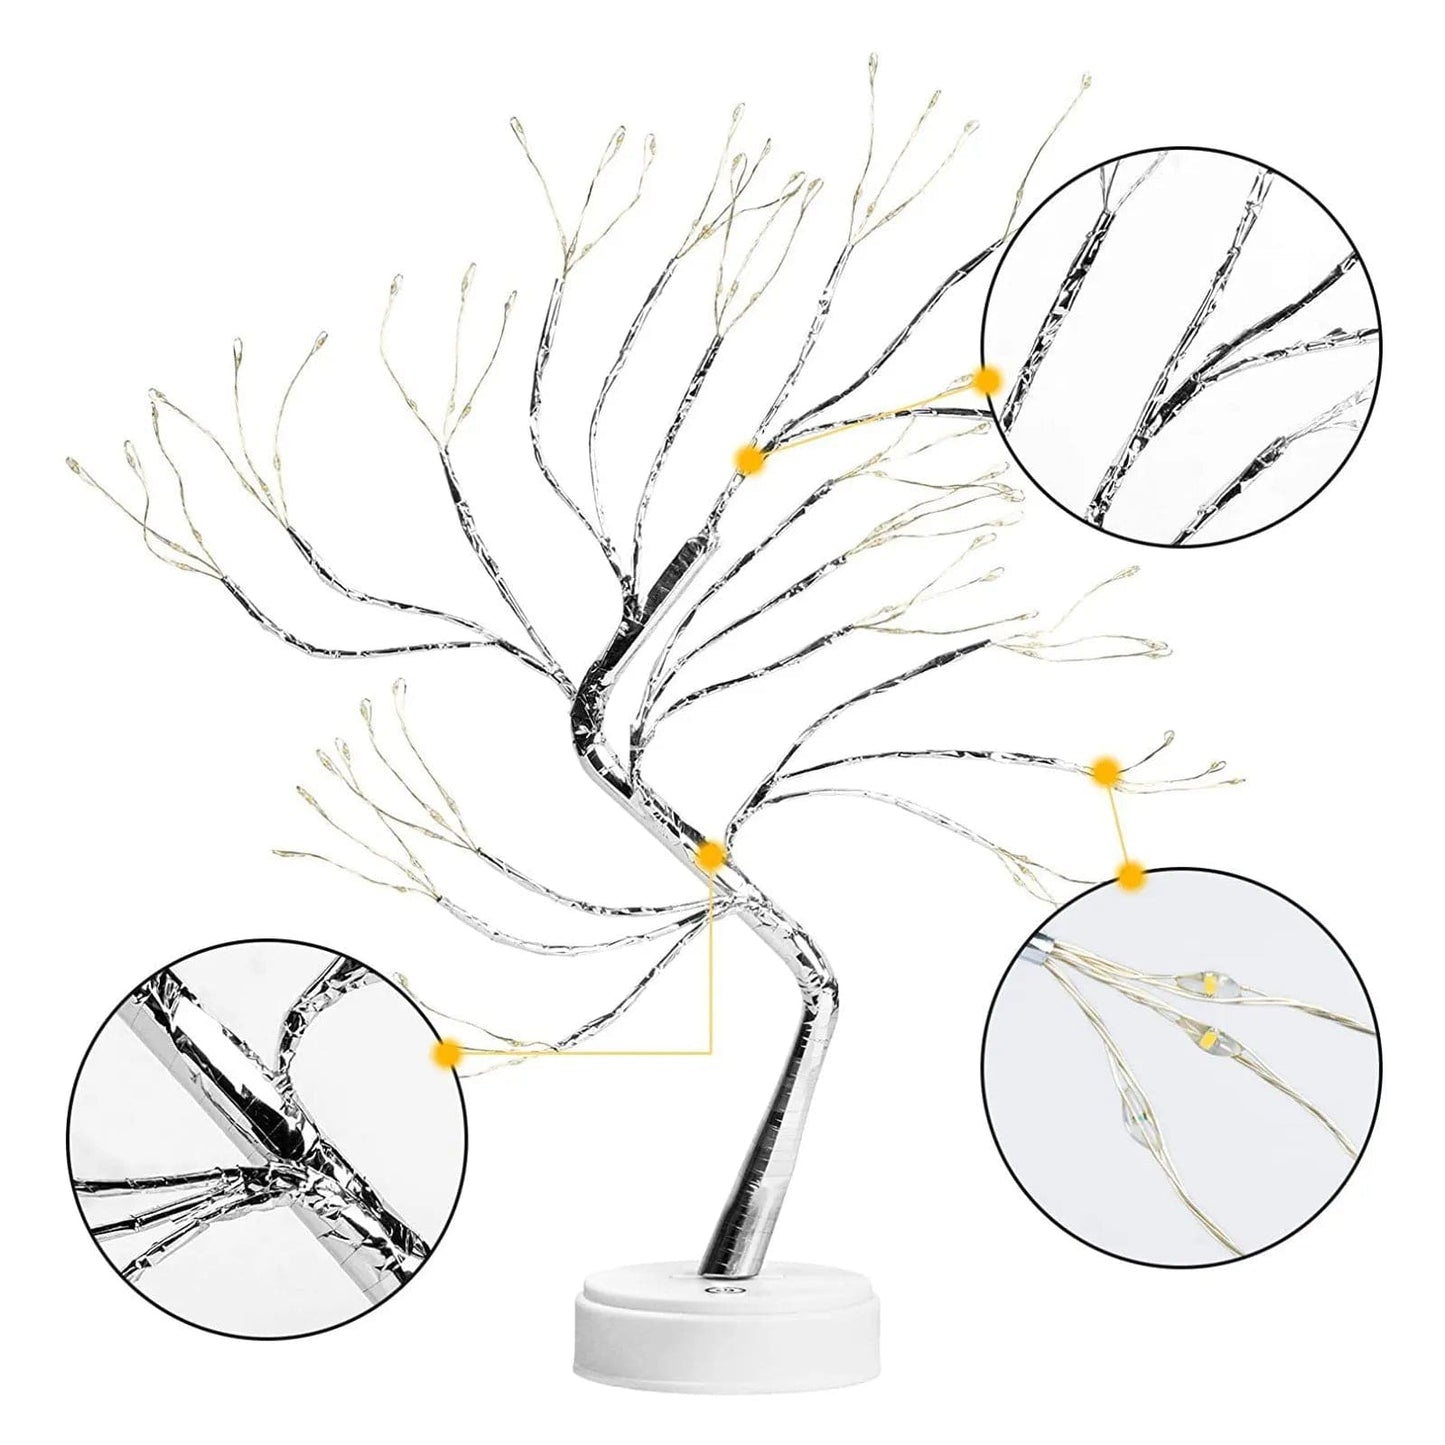 ArtOlo Store Decorative LED Tabletop Bonsai Tree Lamp